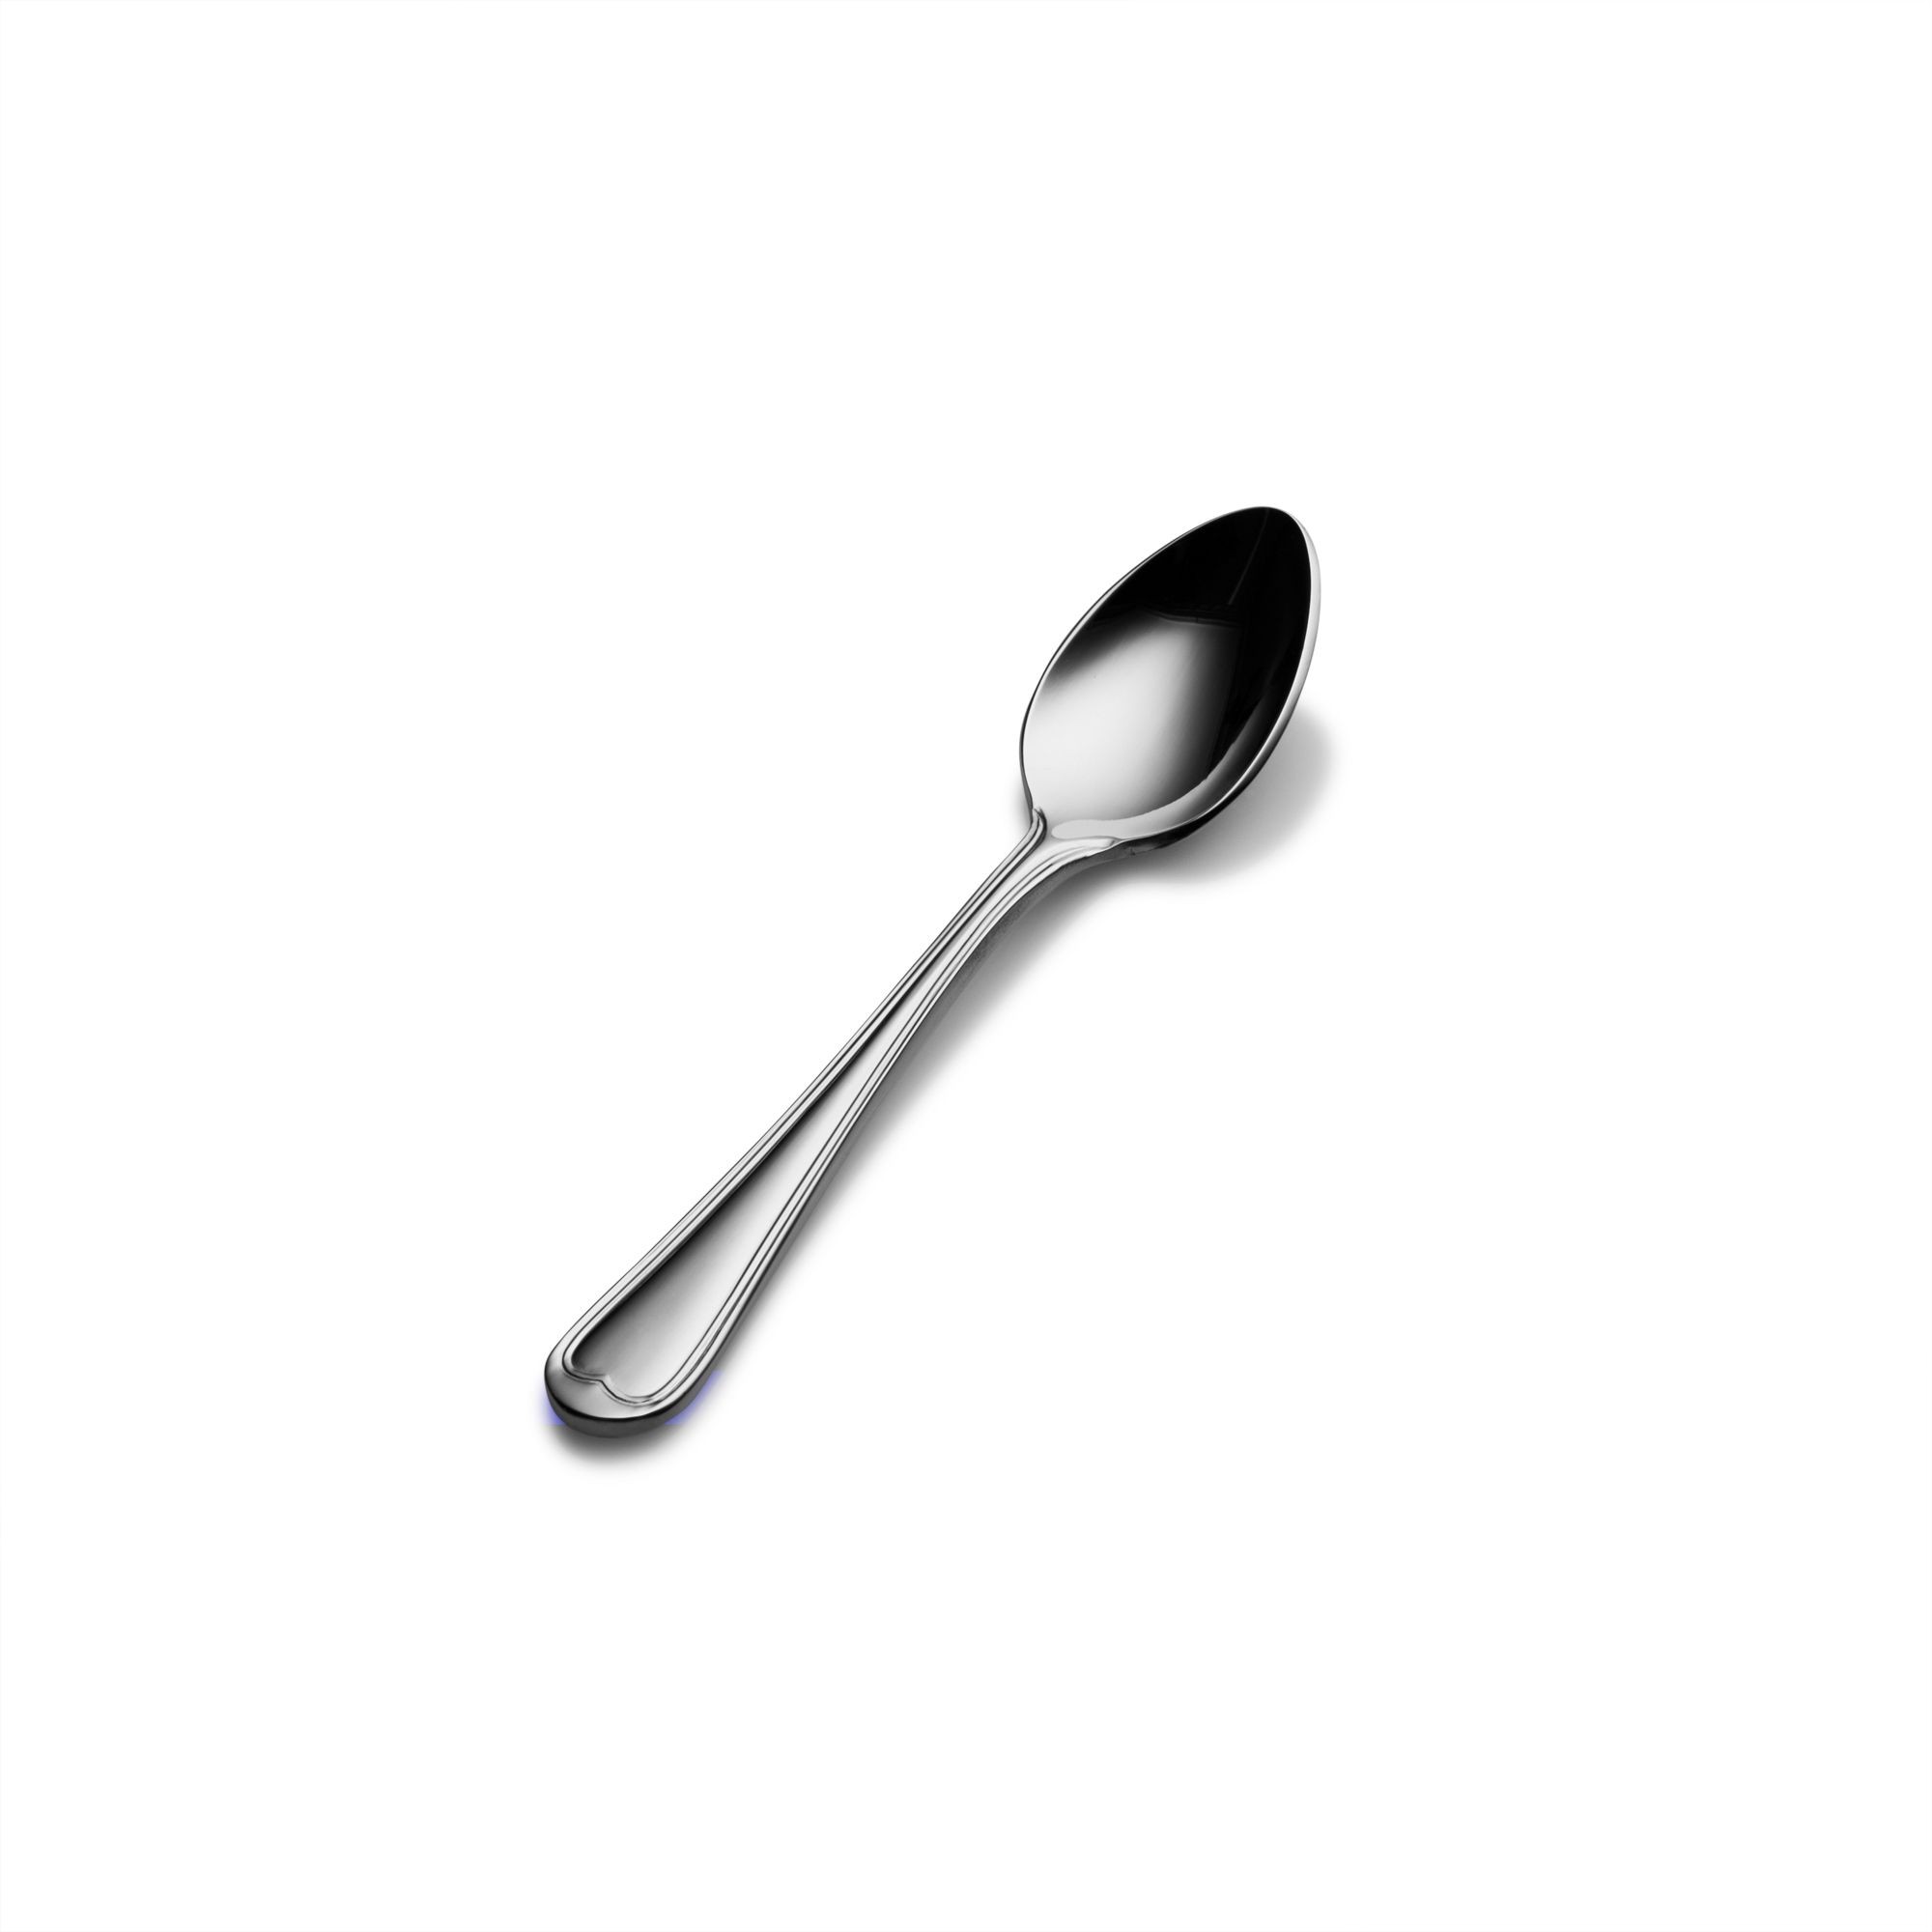 Bon Chef S616 Victoria 18/8 Stainless Steel Demitasse Spoon